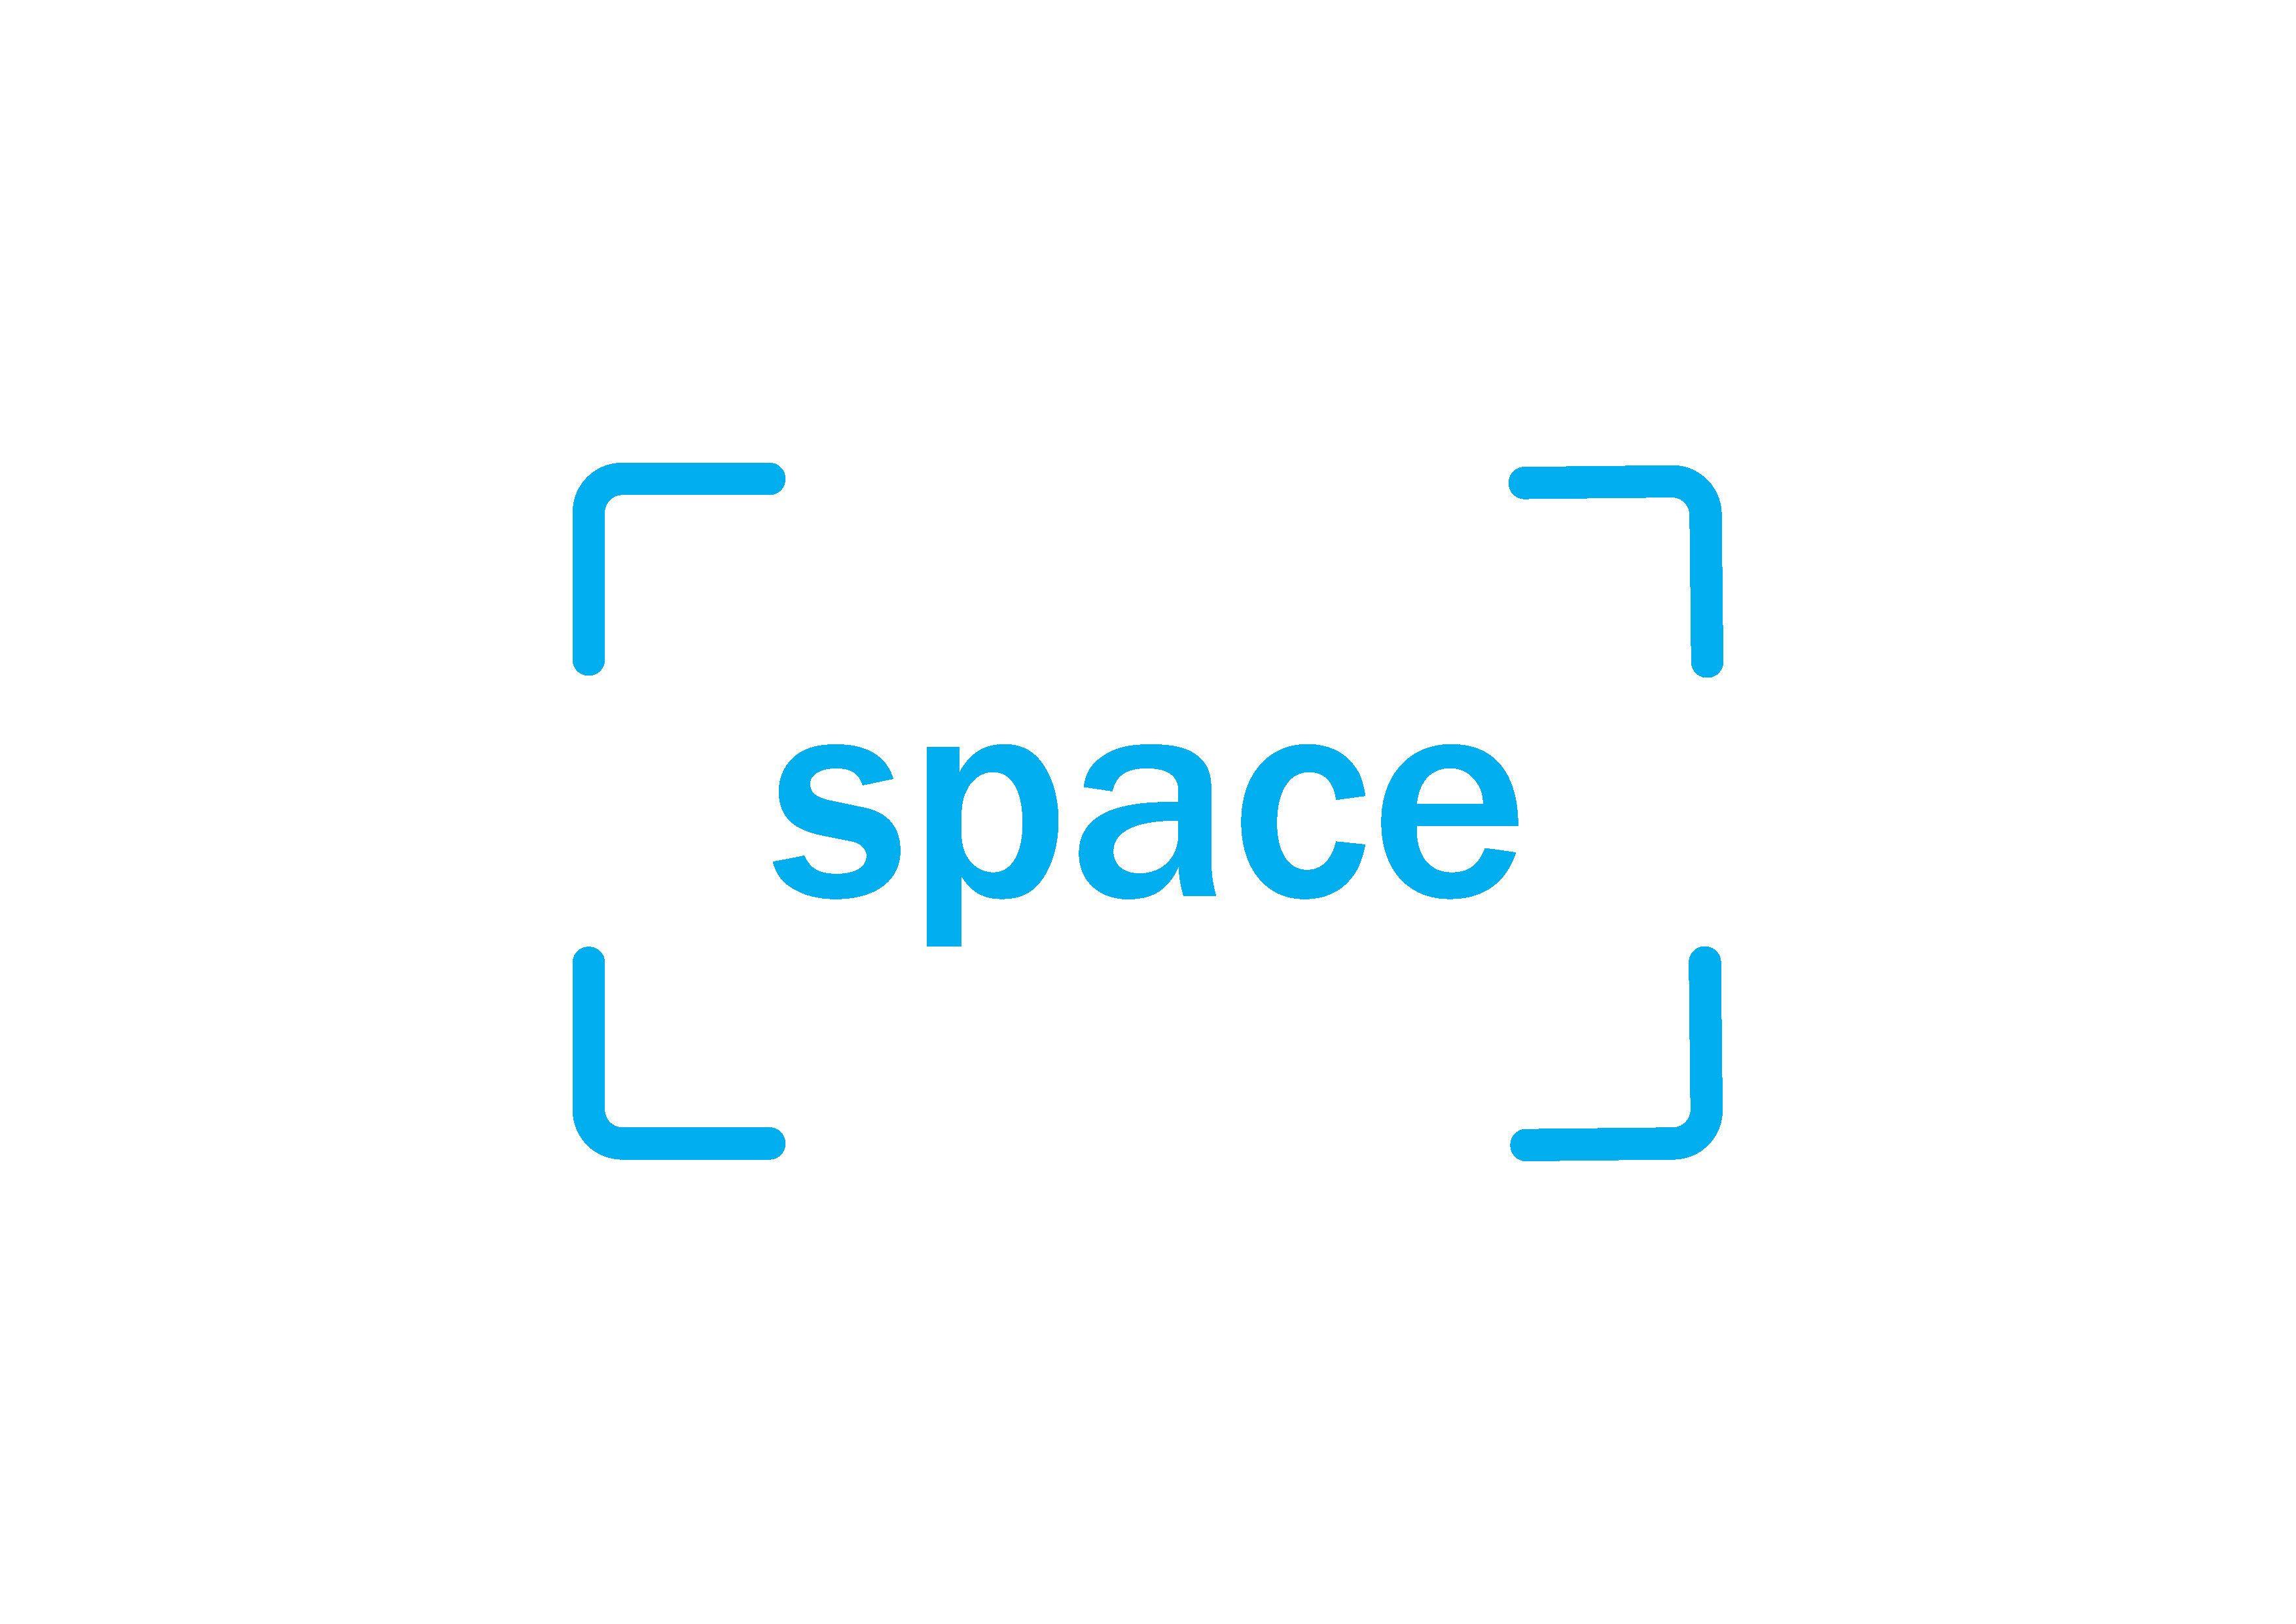 Space Company Logo - Logo Design Challenge #1. My logo design for Space company which ...